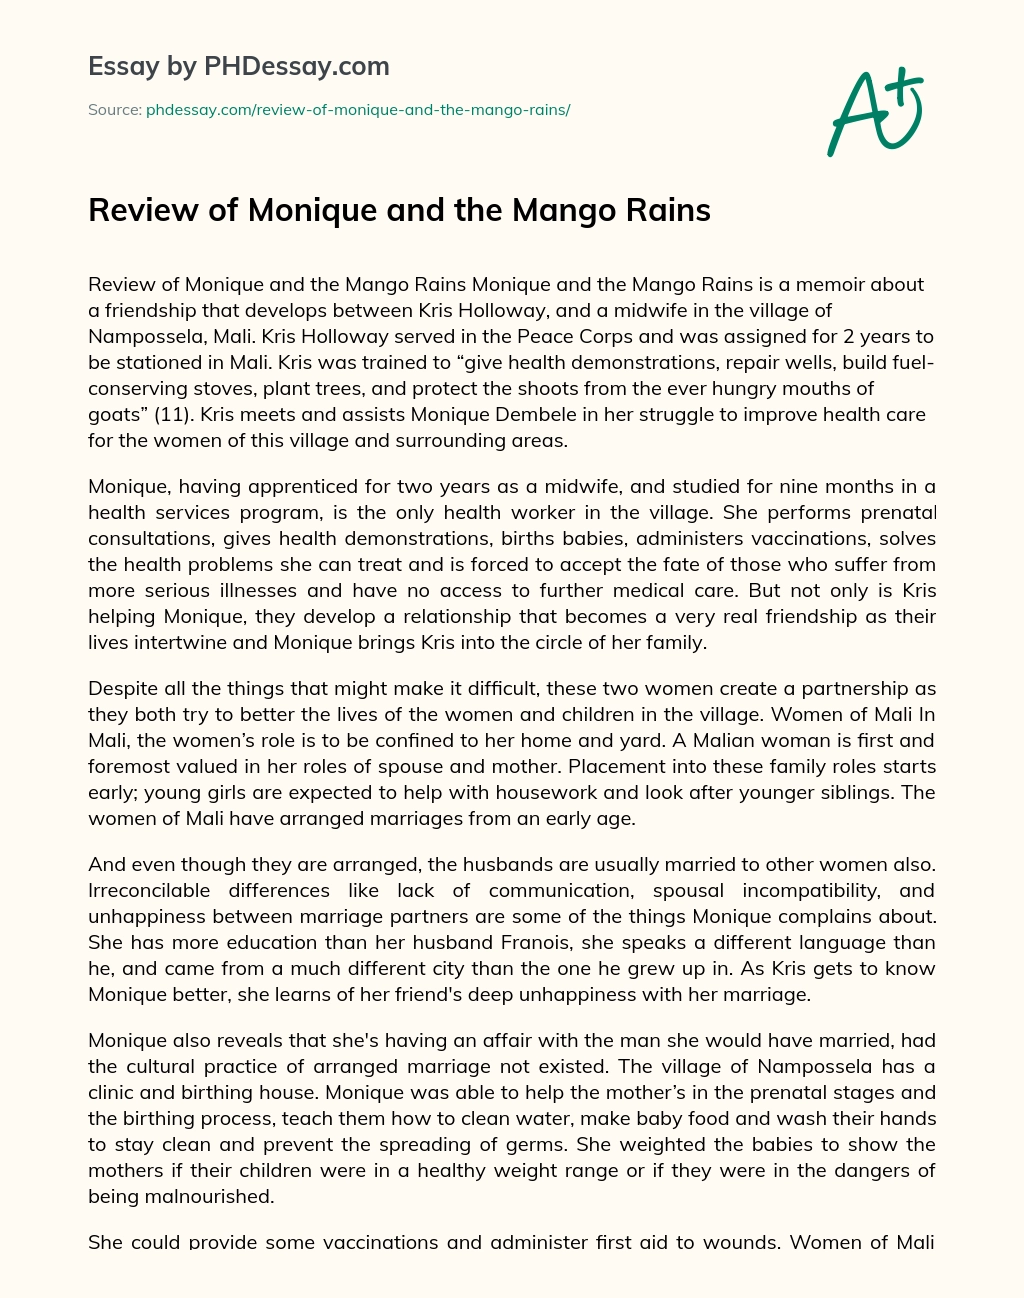 Review of Monique and the Mango Rains essay